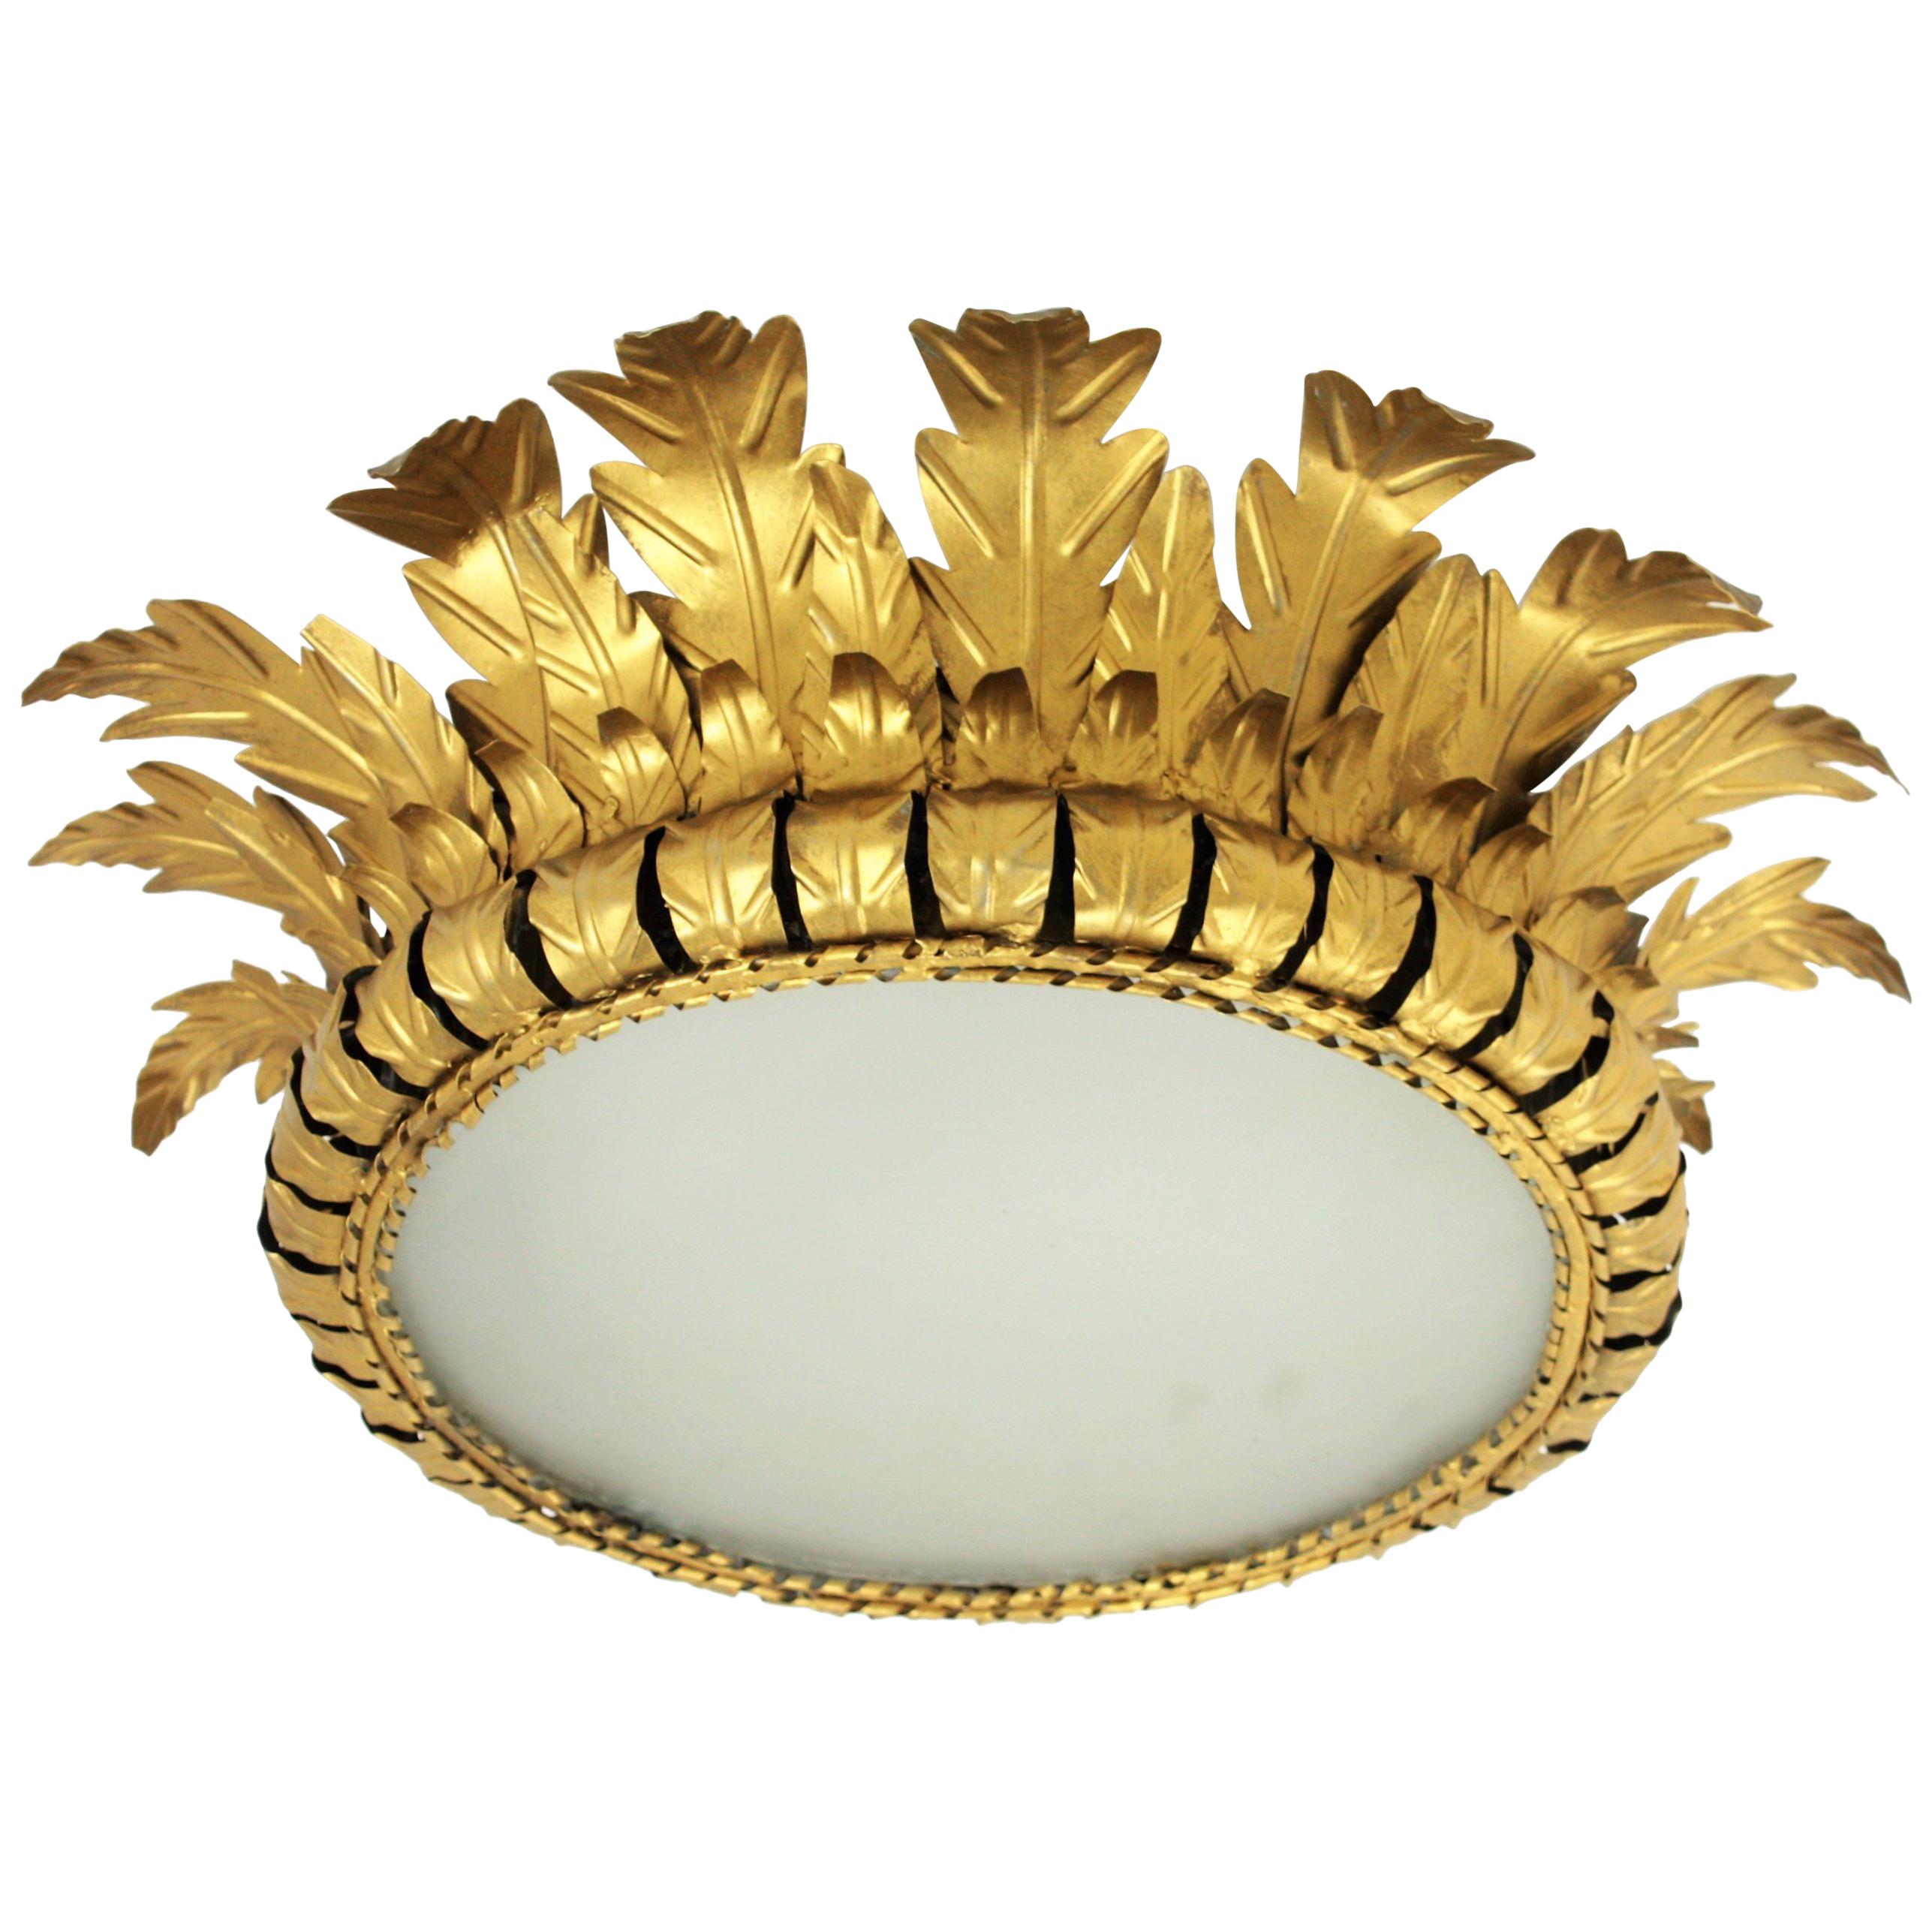 Large midcentury gilt metal crown sunburst flush mount with leaf motif, Spain, 1950s-1960s.
A beautiful 22